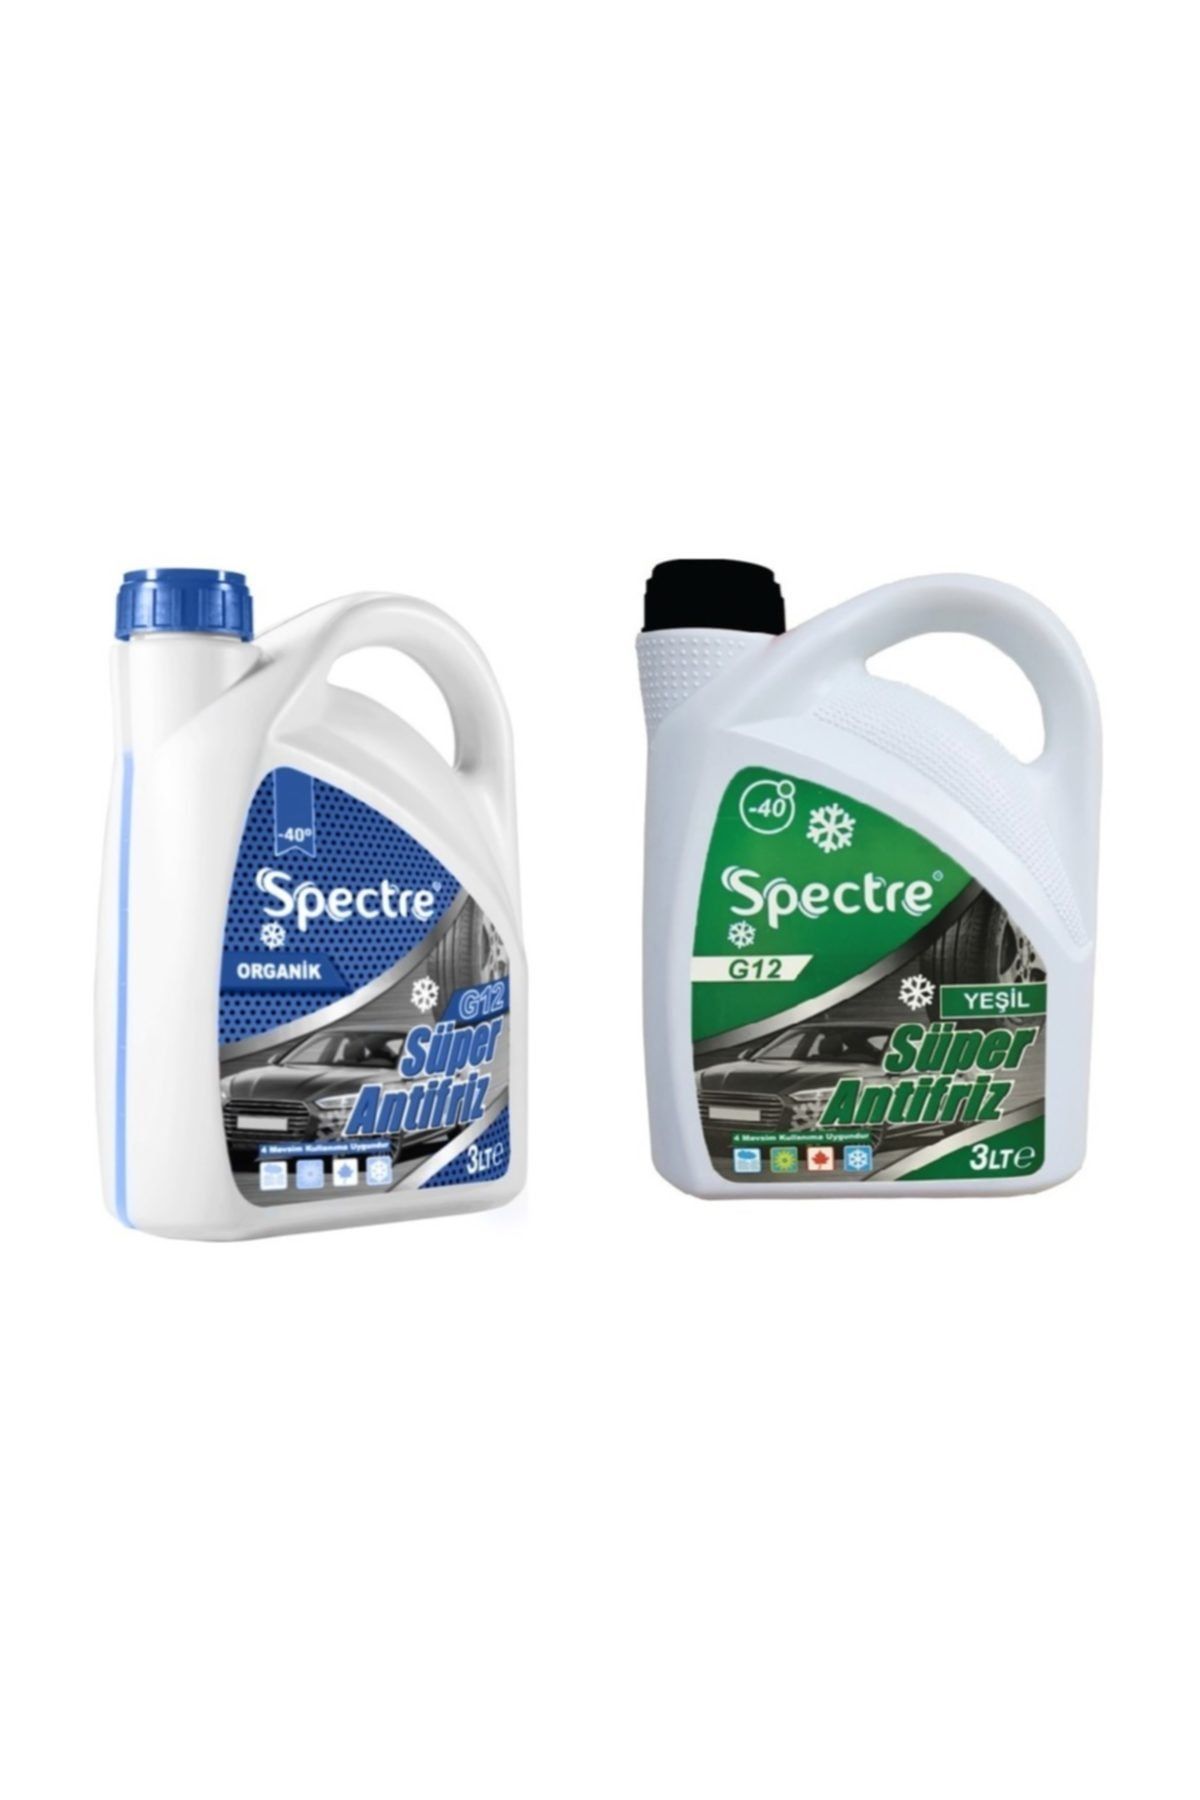 SPECTRE G12 Mavi 4 Yeşil Organik Süper -40 Antifriz 2x3 Litre *2019